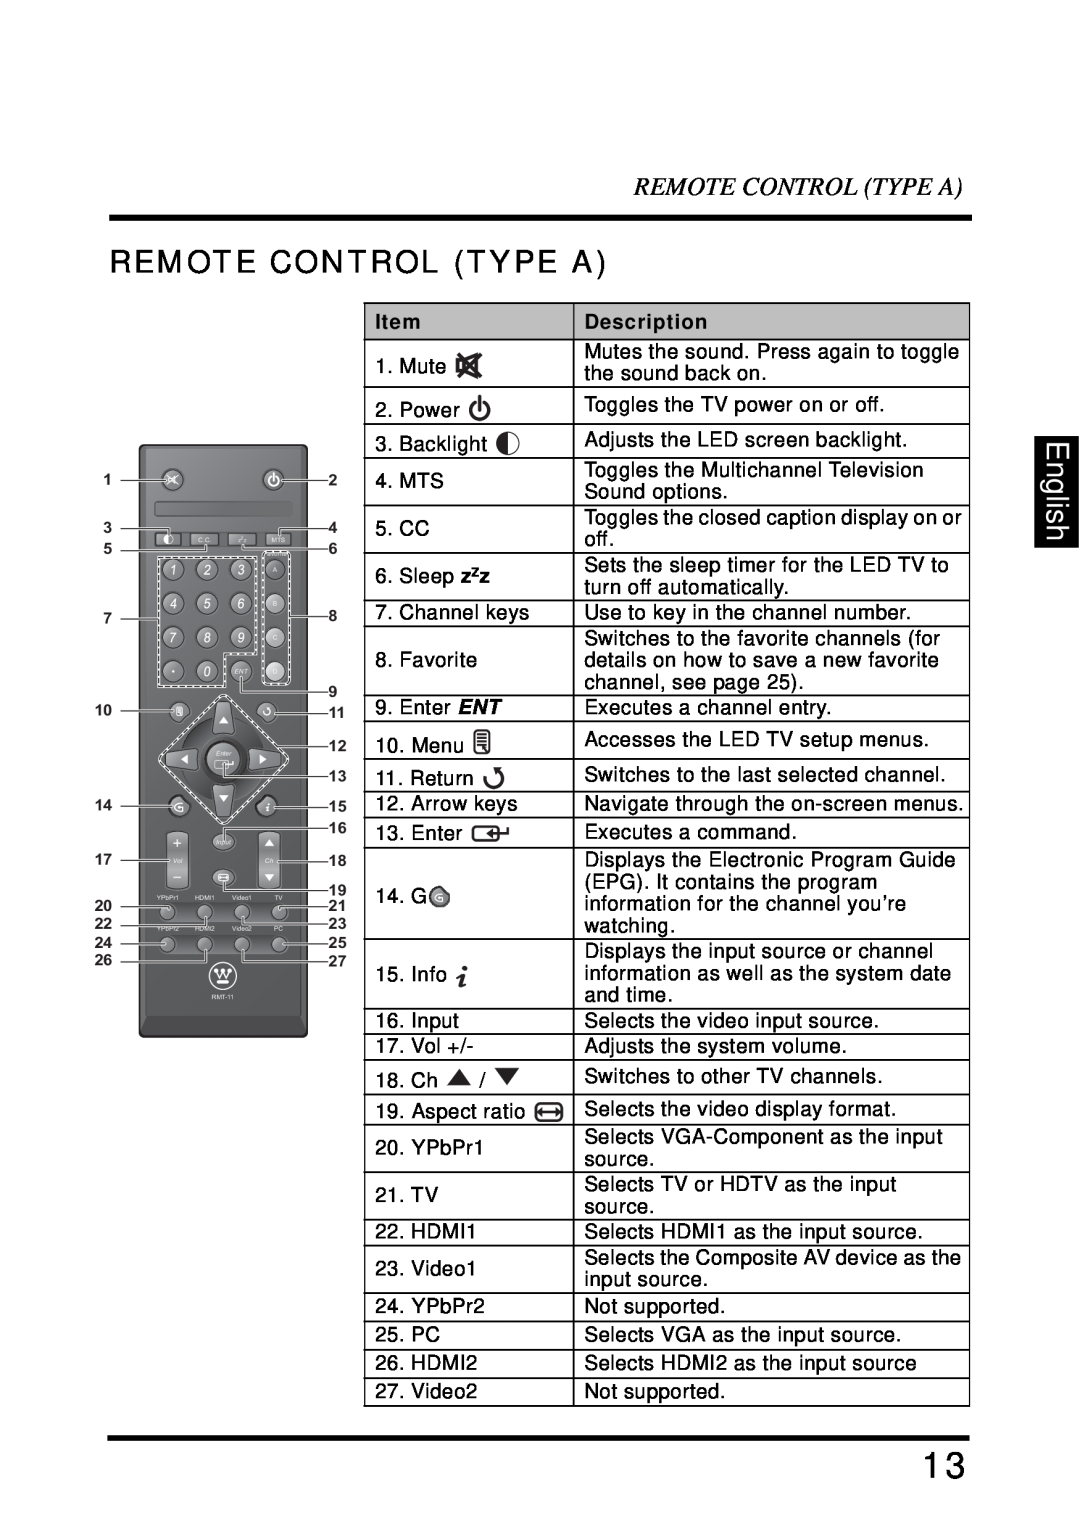 Westinghouse LD-4680 user manual Remote Control Type A, English, Description 